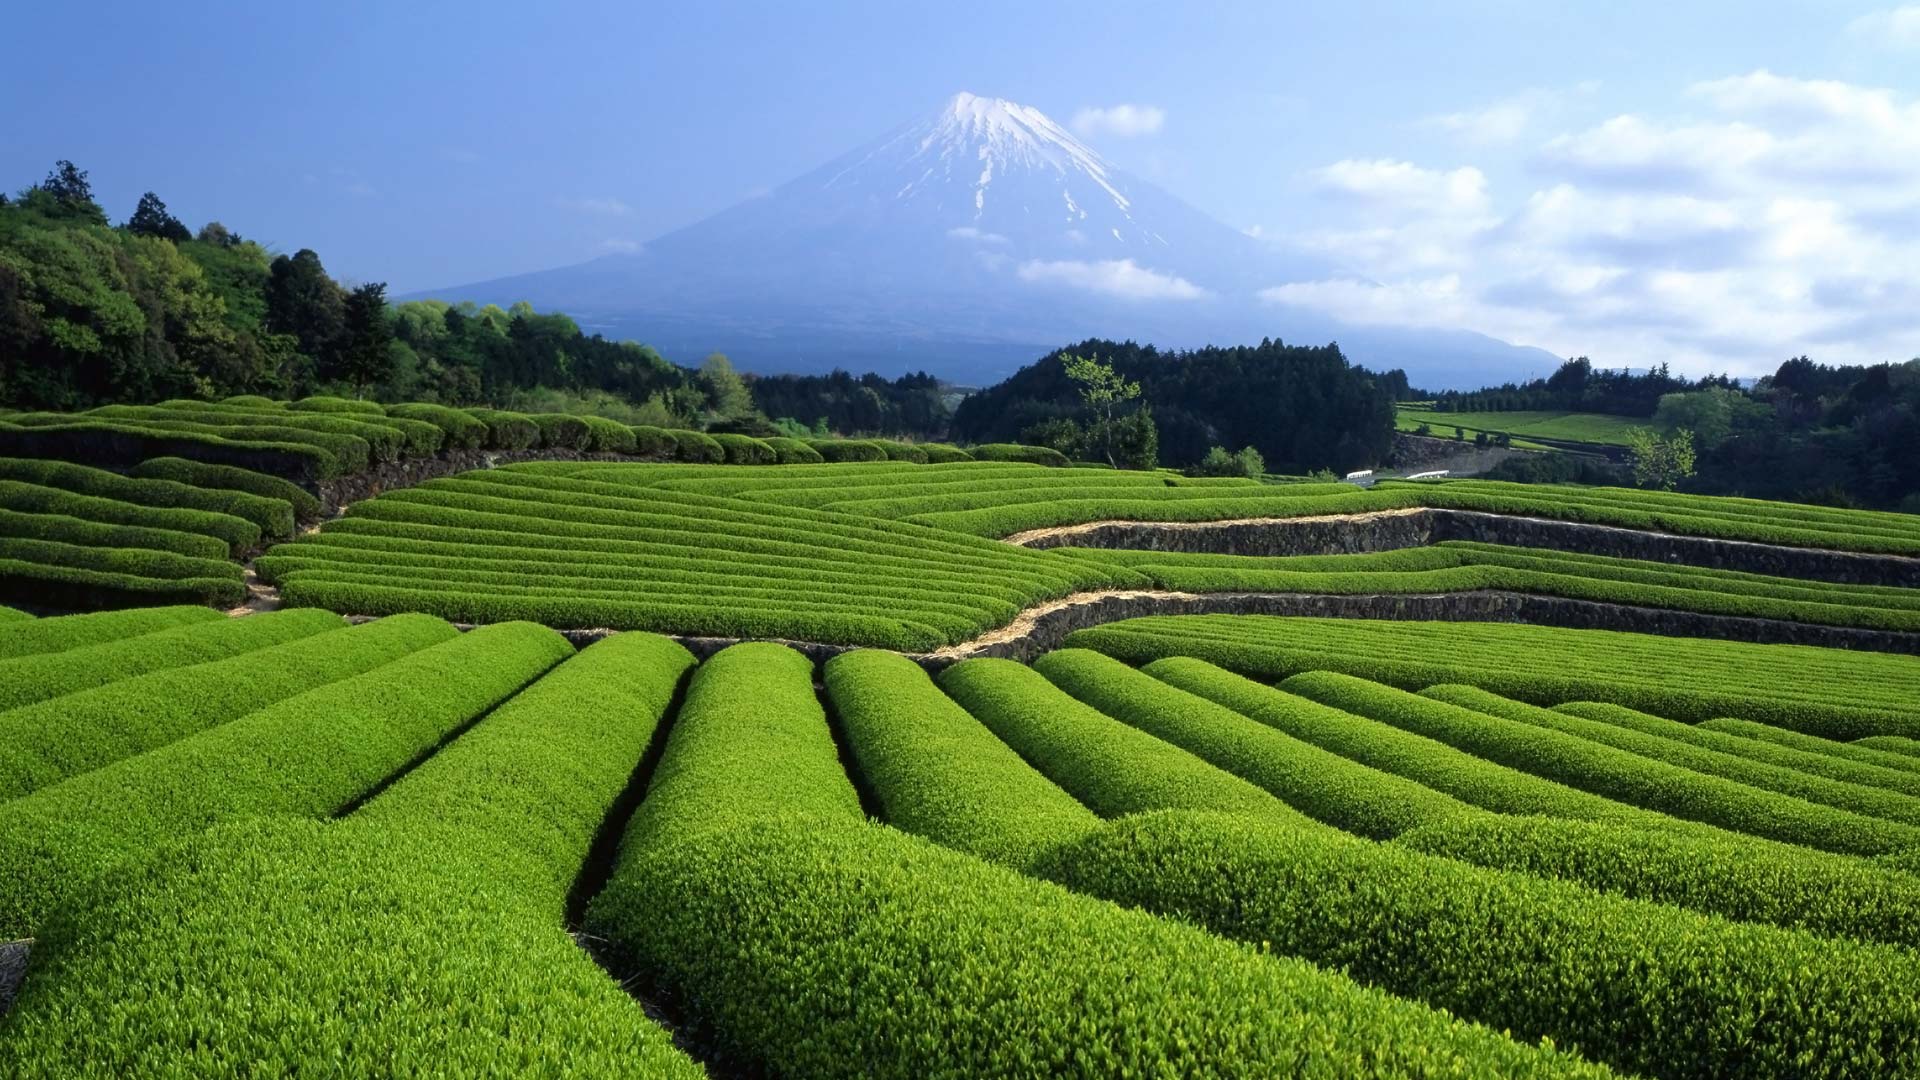 man made, tea plantation